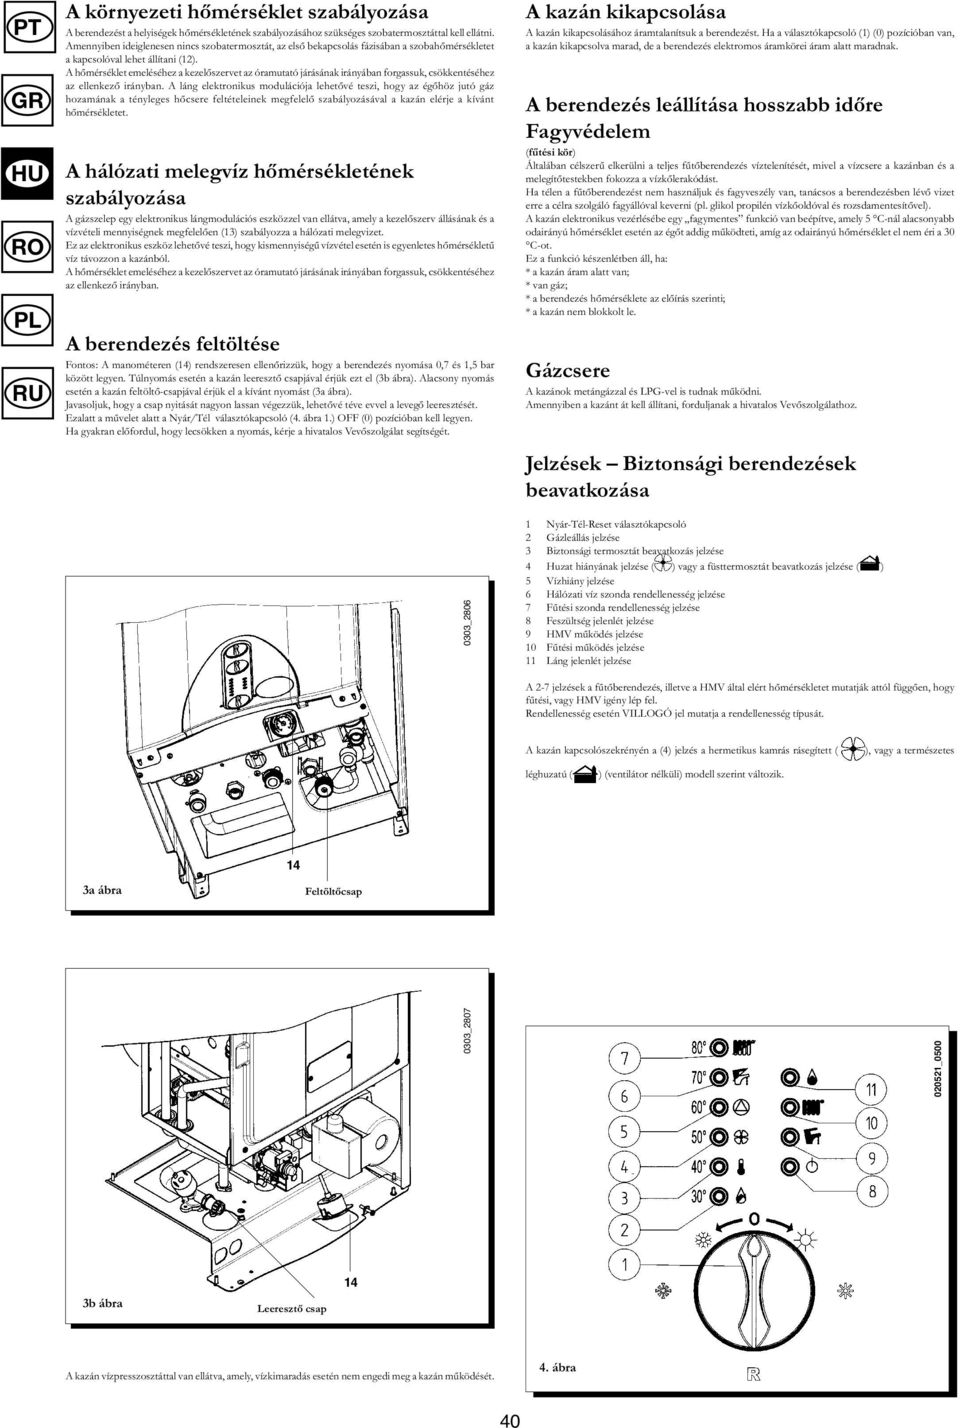 QUASAR 24 F QUASAR 24 - PDF Ingyenes letöltés